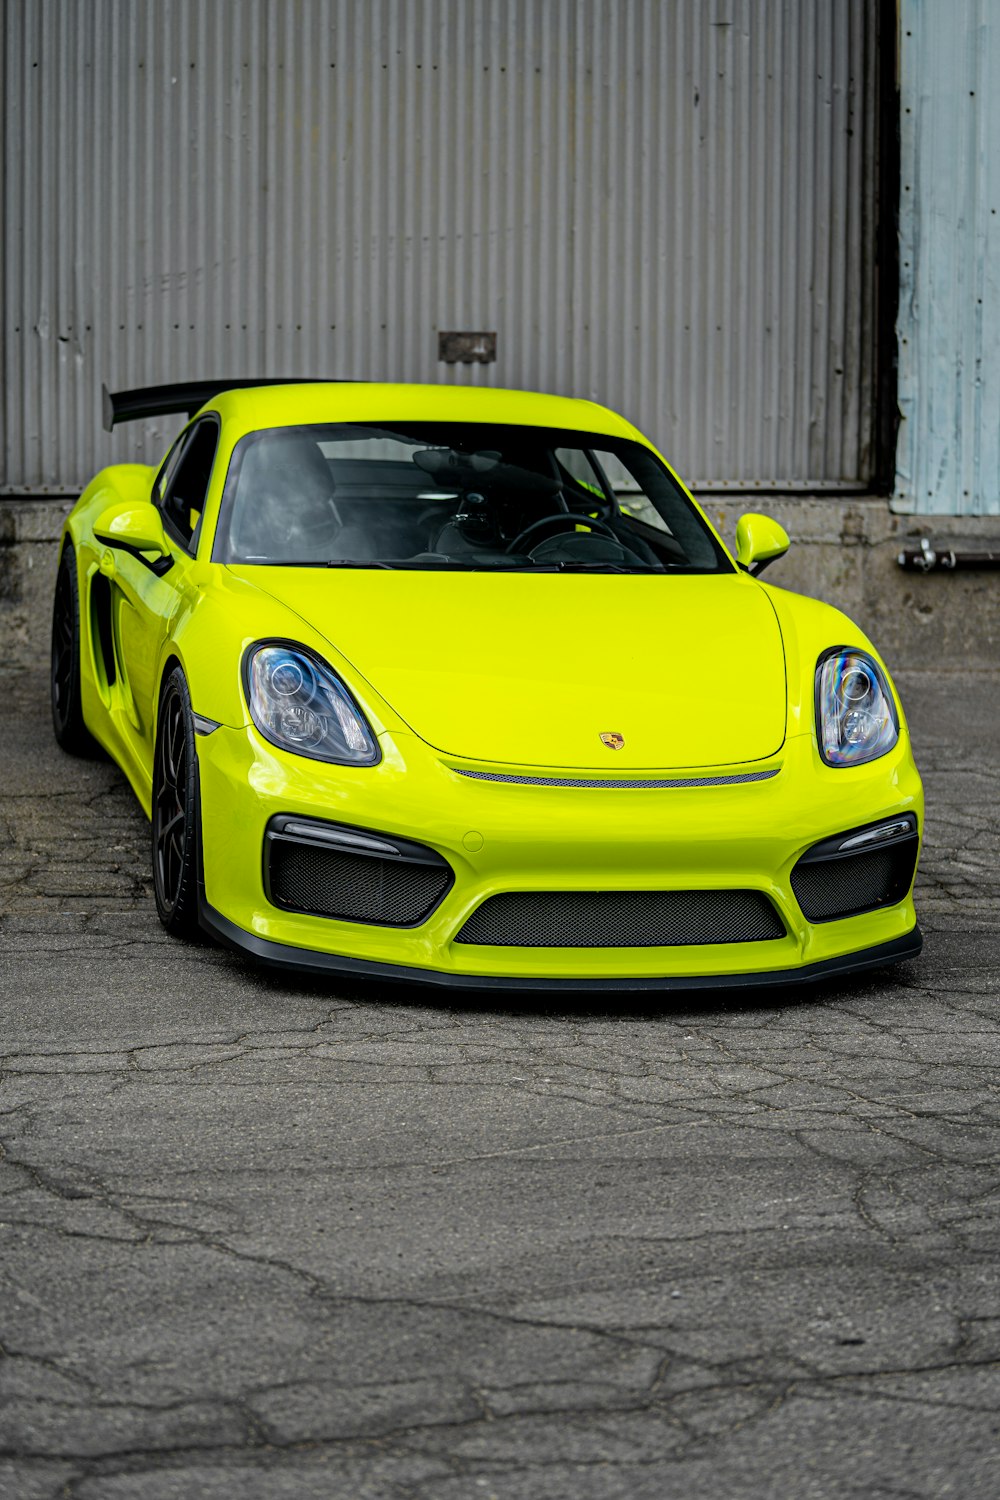 Porsche 911 amarillo aparcado cerca de un edificio blanco